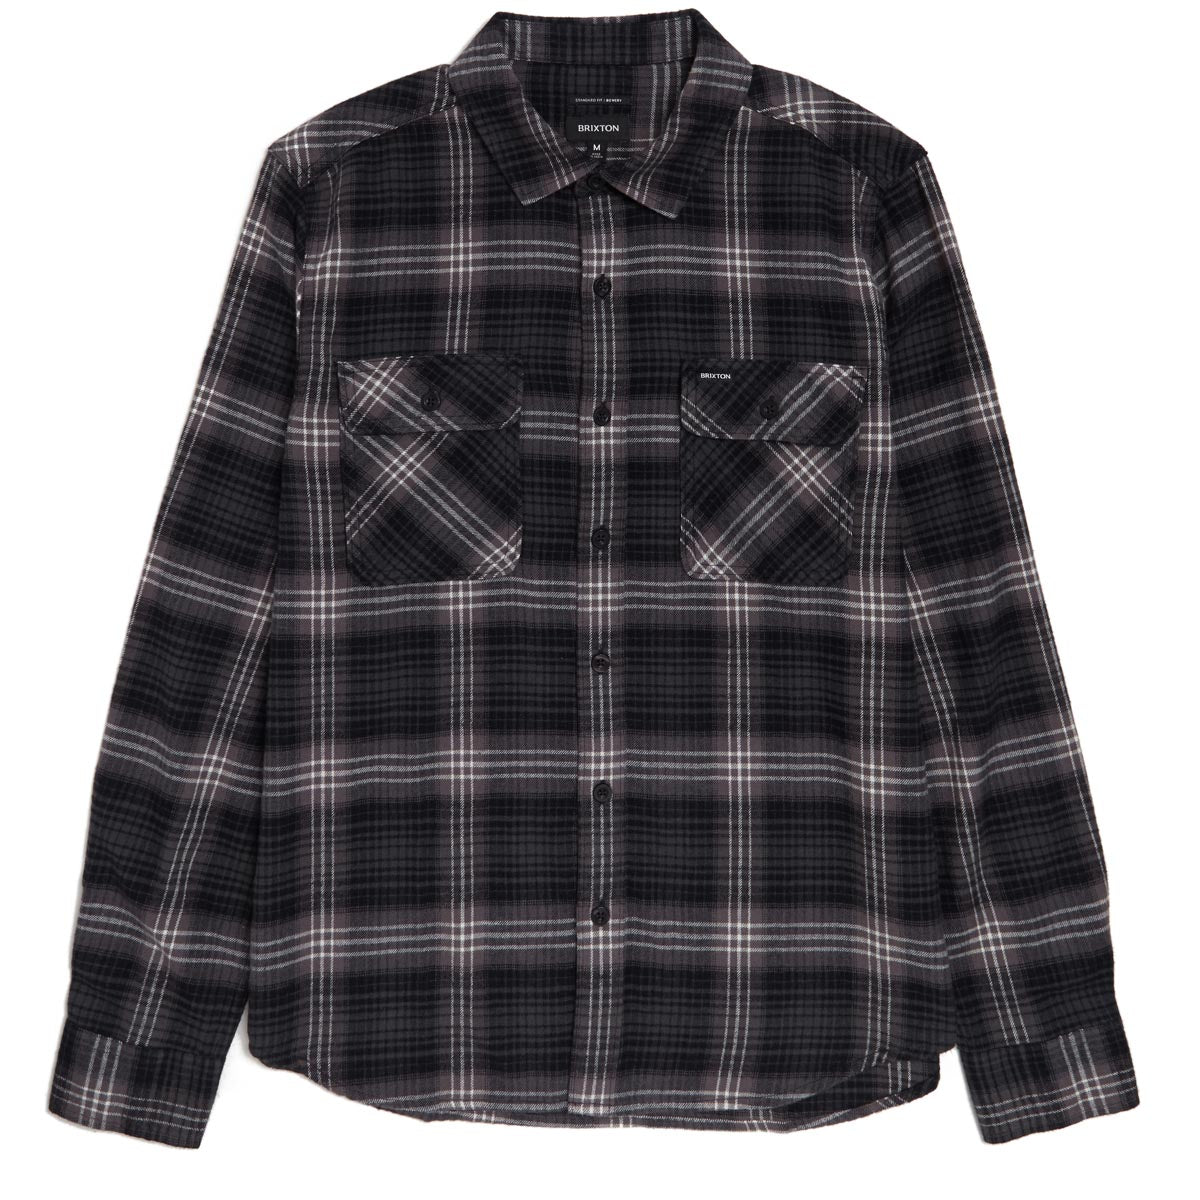 Brixton Bowery Lightweight Ultra Flannel Shirt - Charcoal/Black image 1